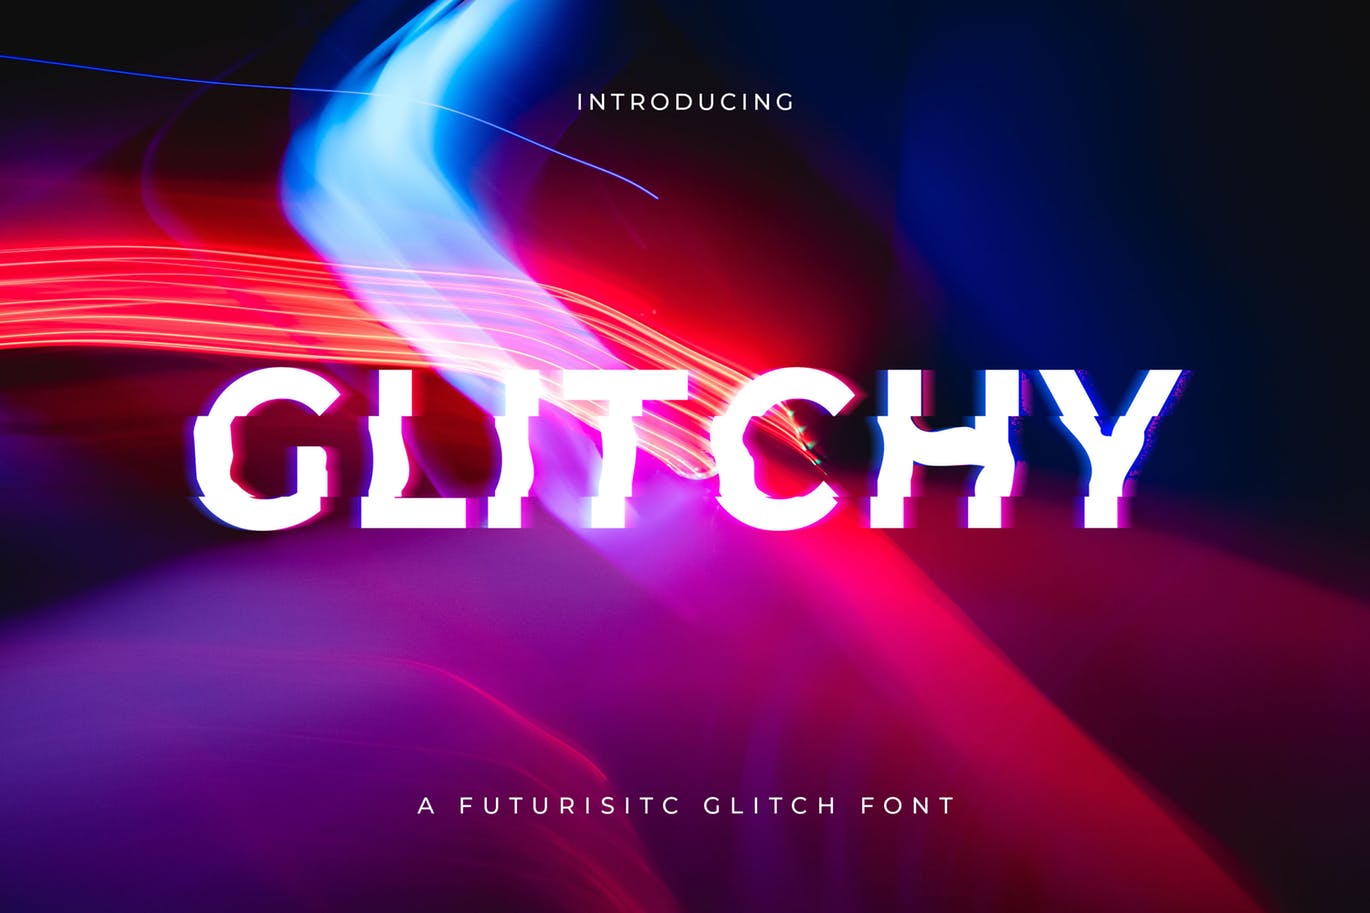 A digital glitch font